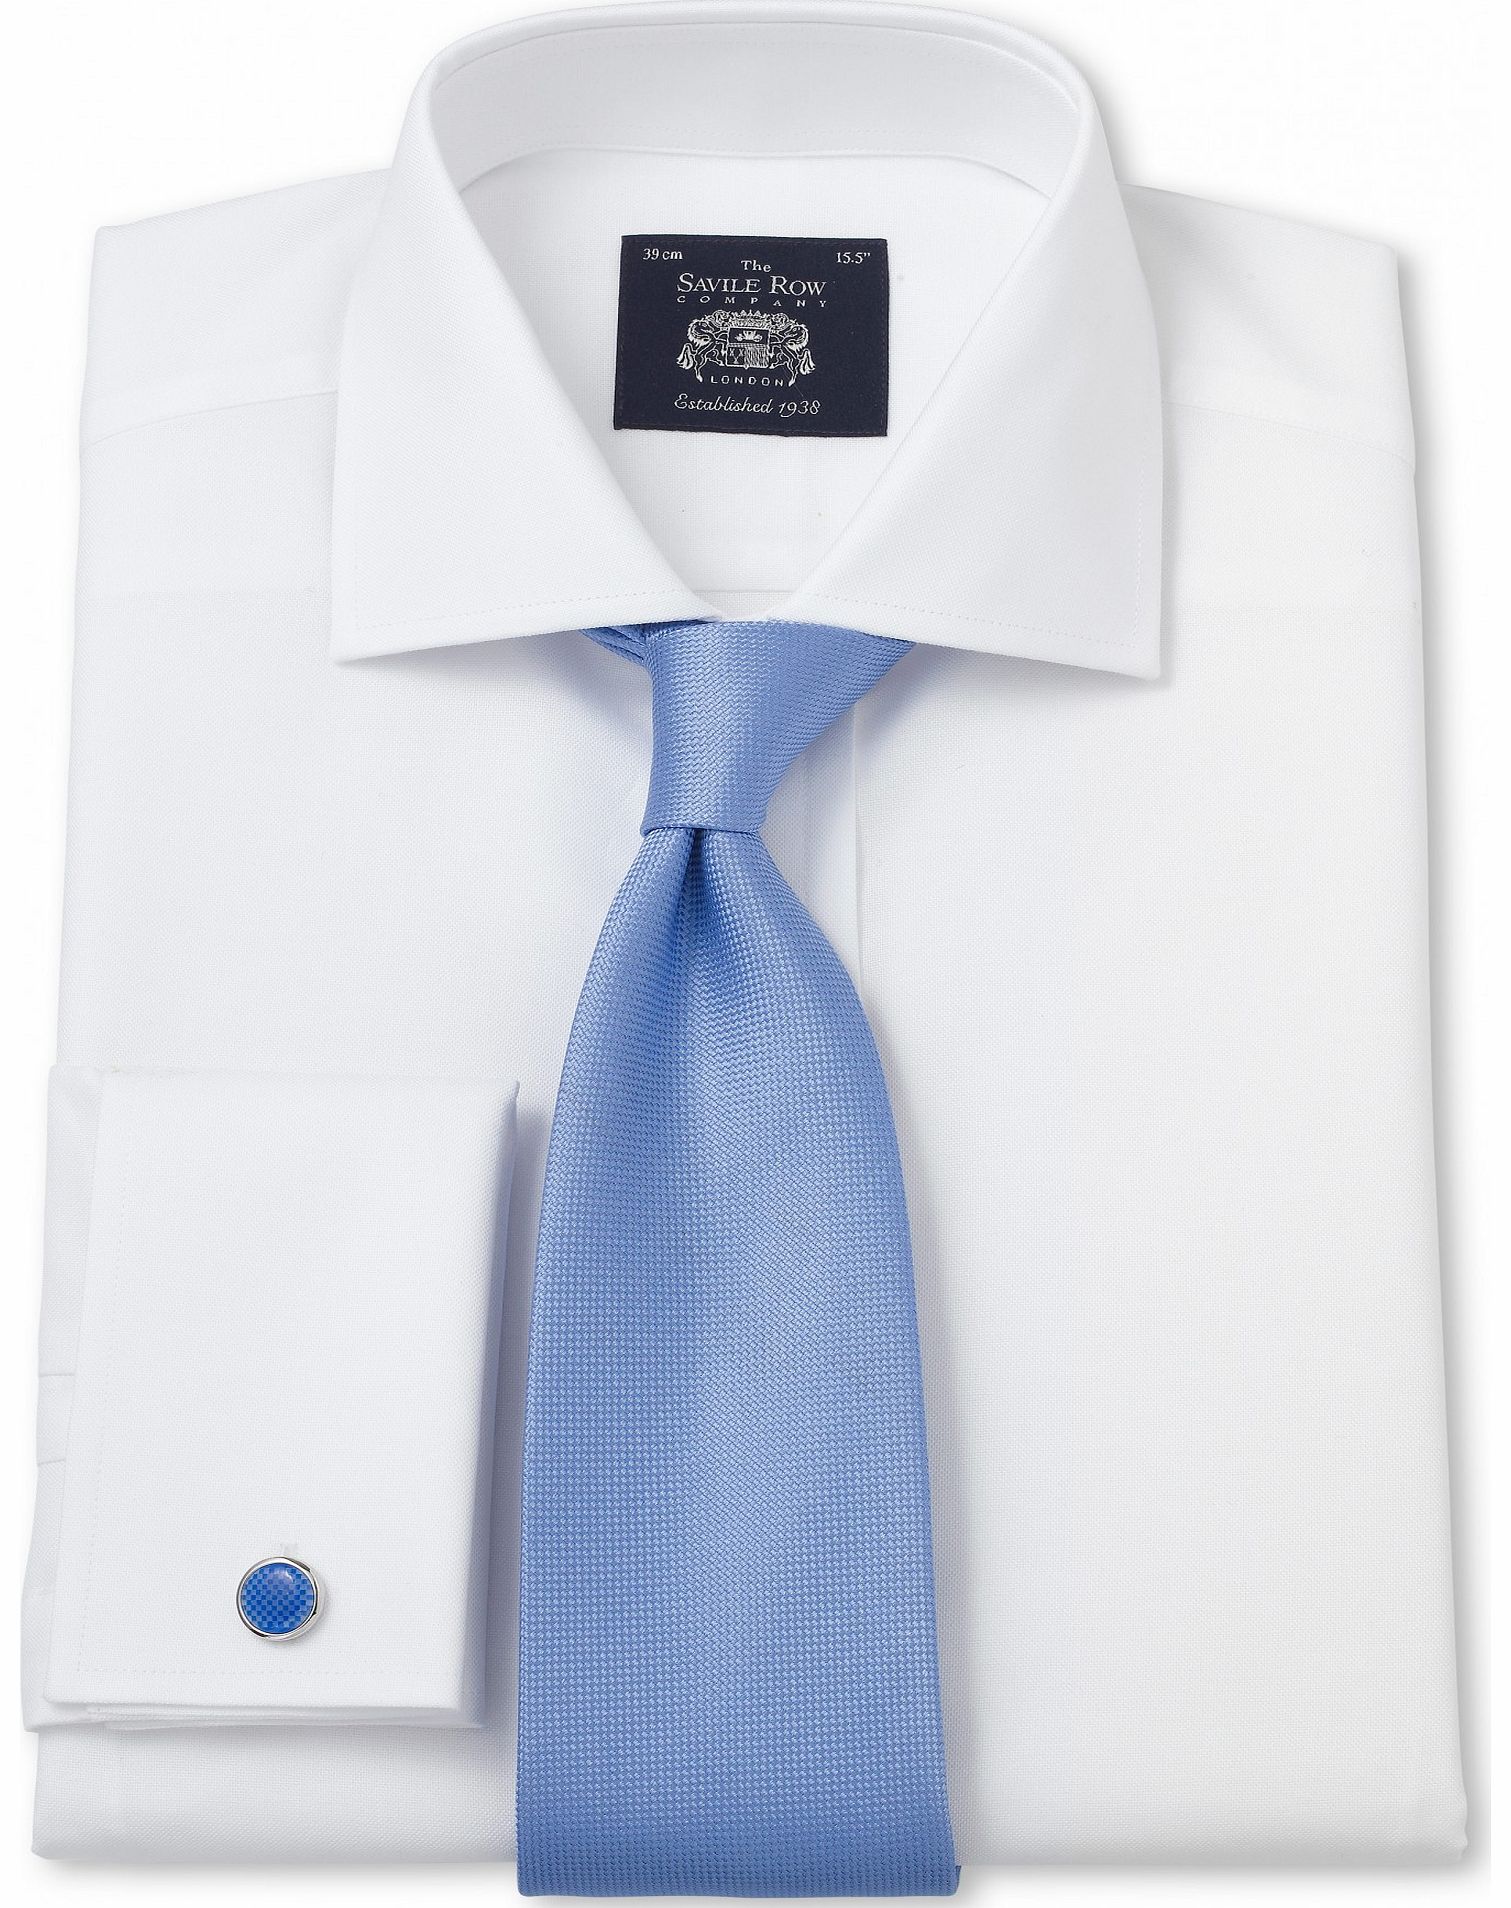 Savile Row Company White Pinpoint Slim Fit Shirt 15 1/2``